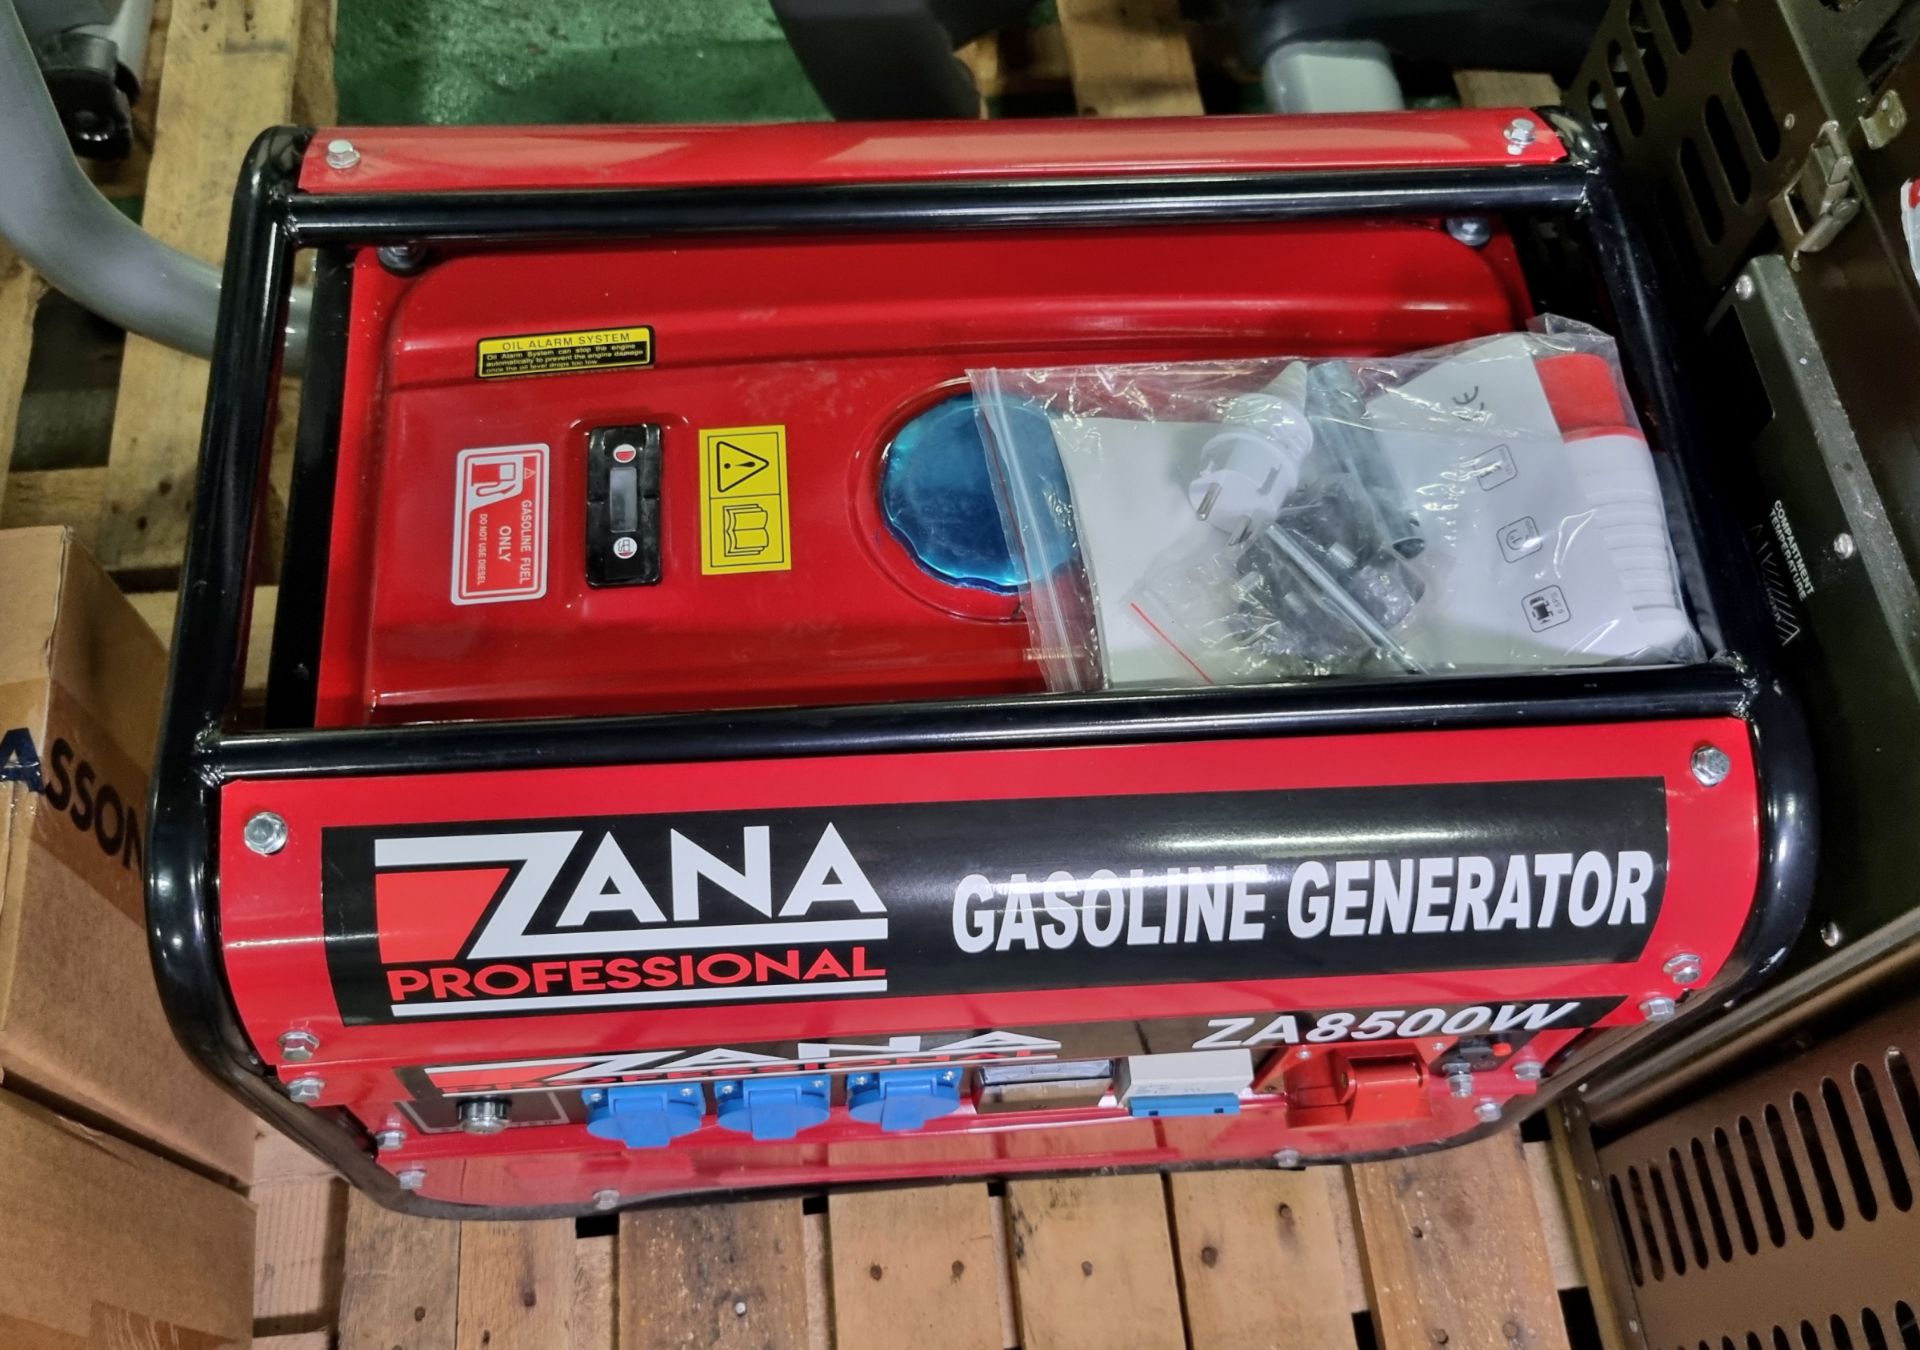 ZANA professional ZA8500W gasoline generator - Image 2 of 12